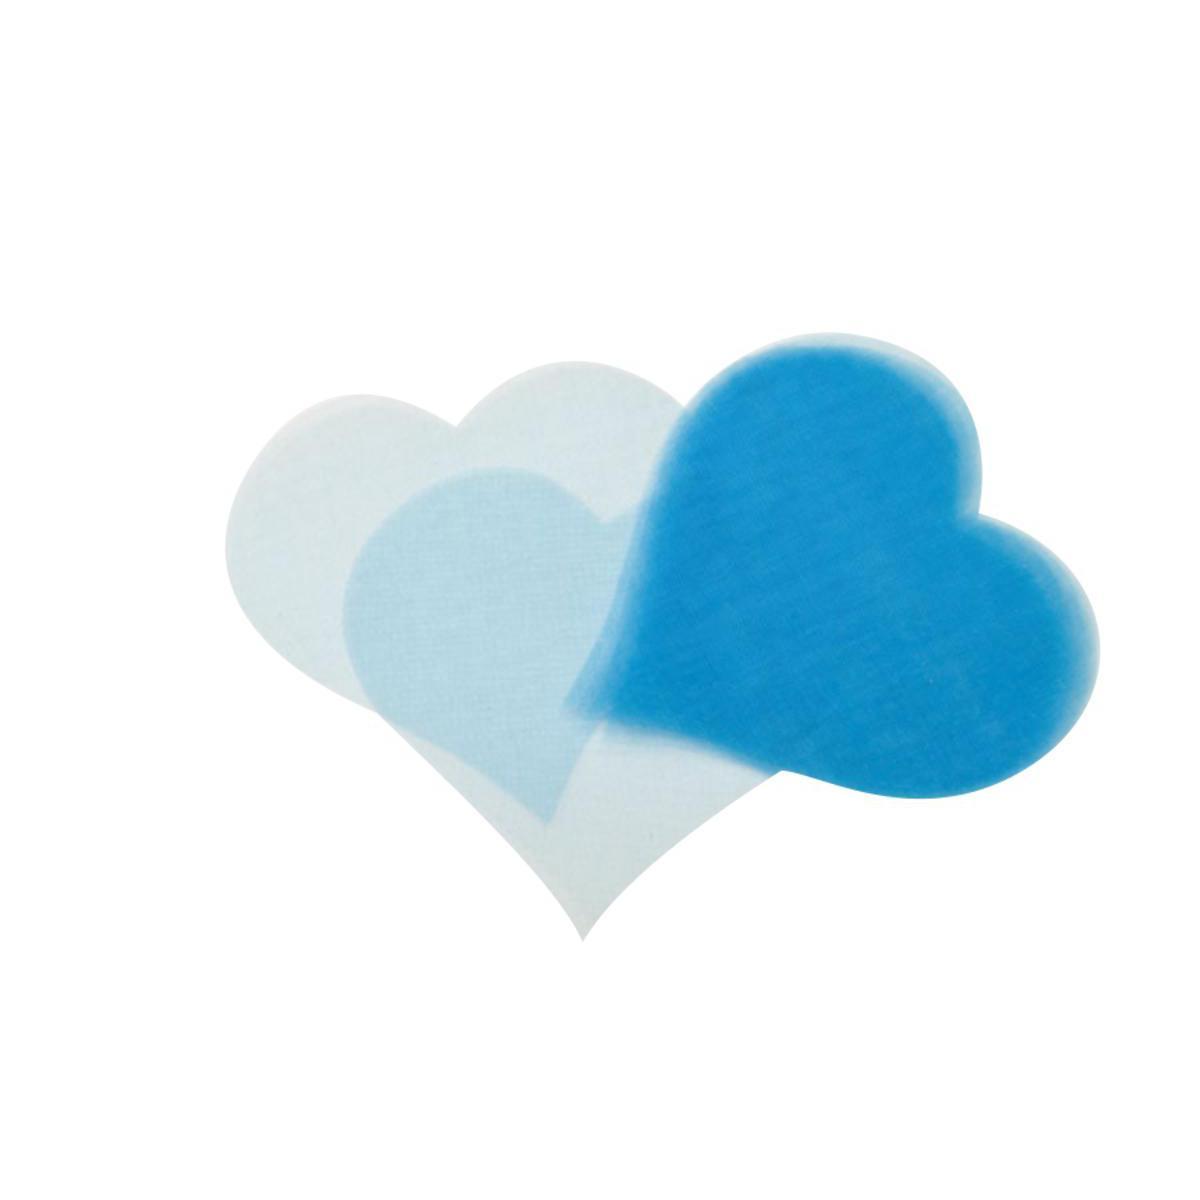 50 cœurs - 8,5 x 8,5 cm - Organza - Bleu turquoise